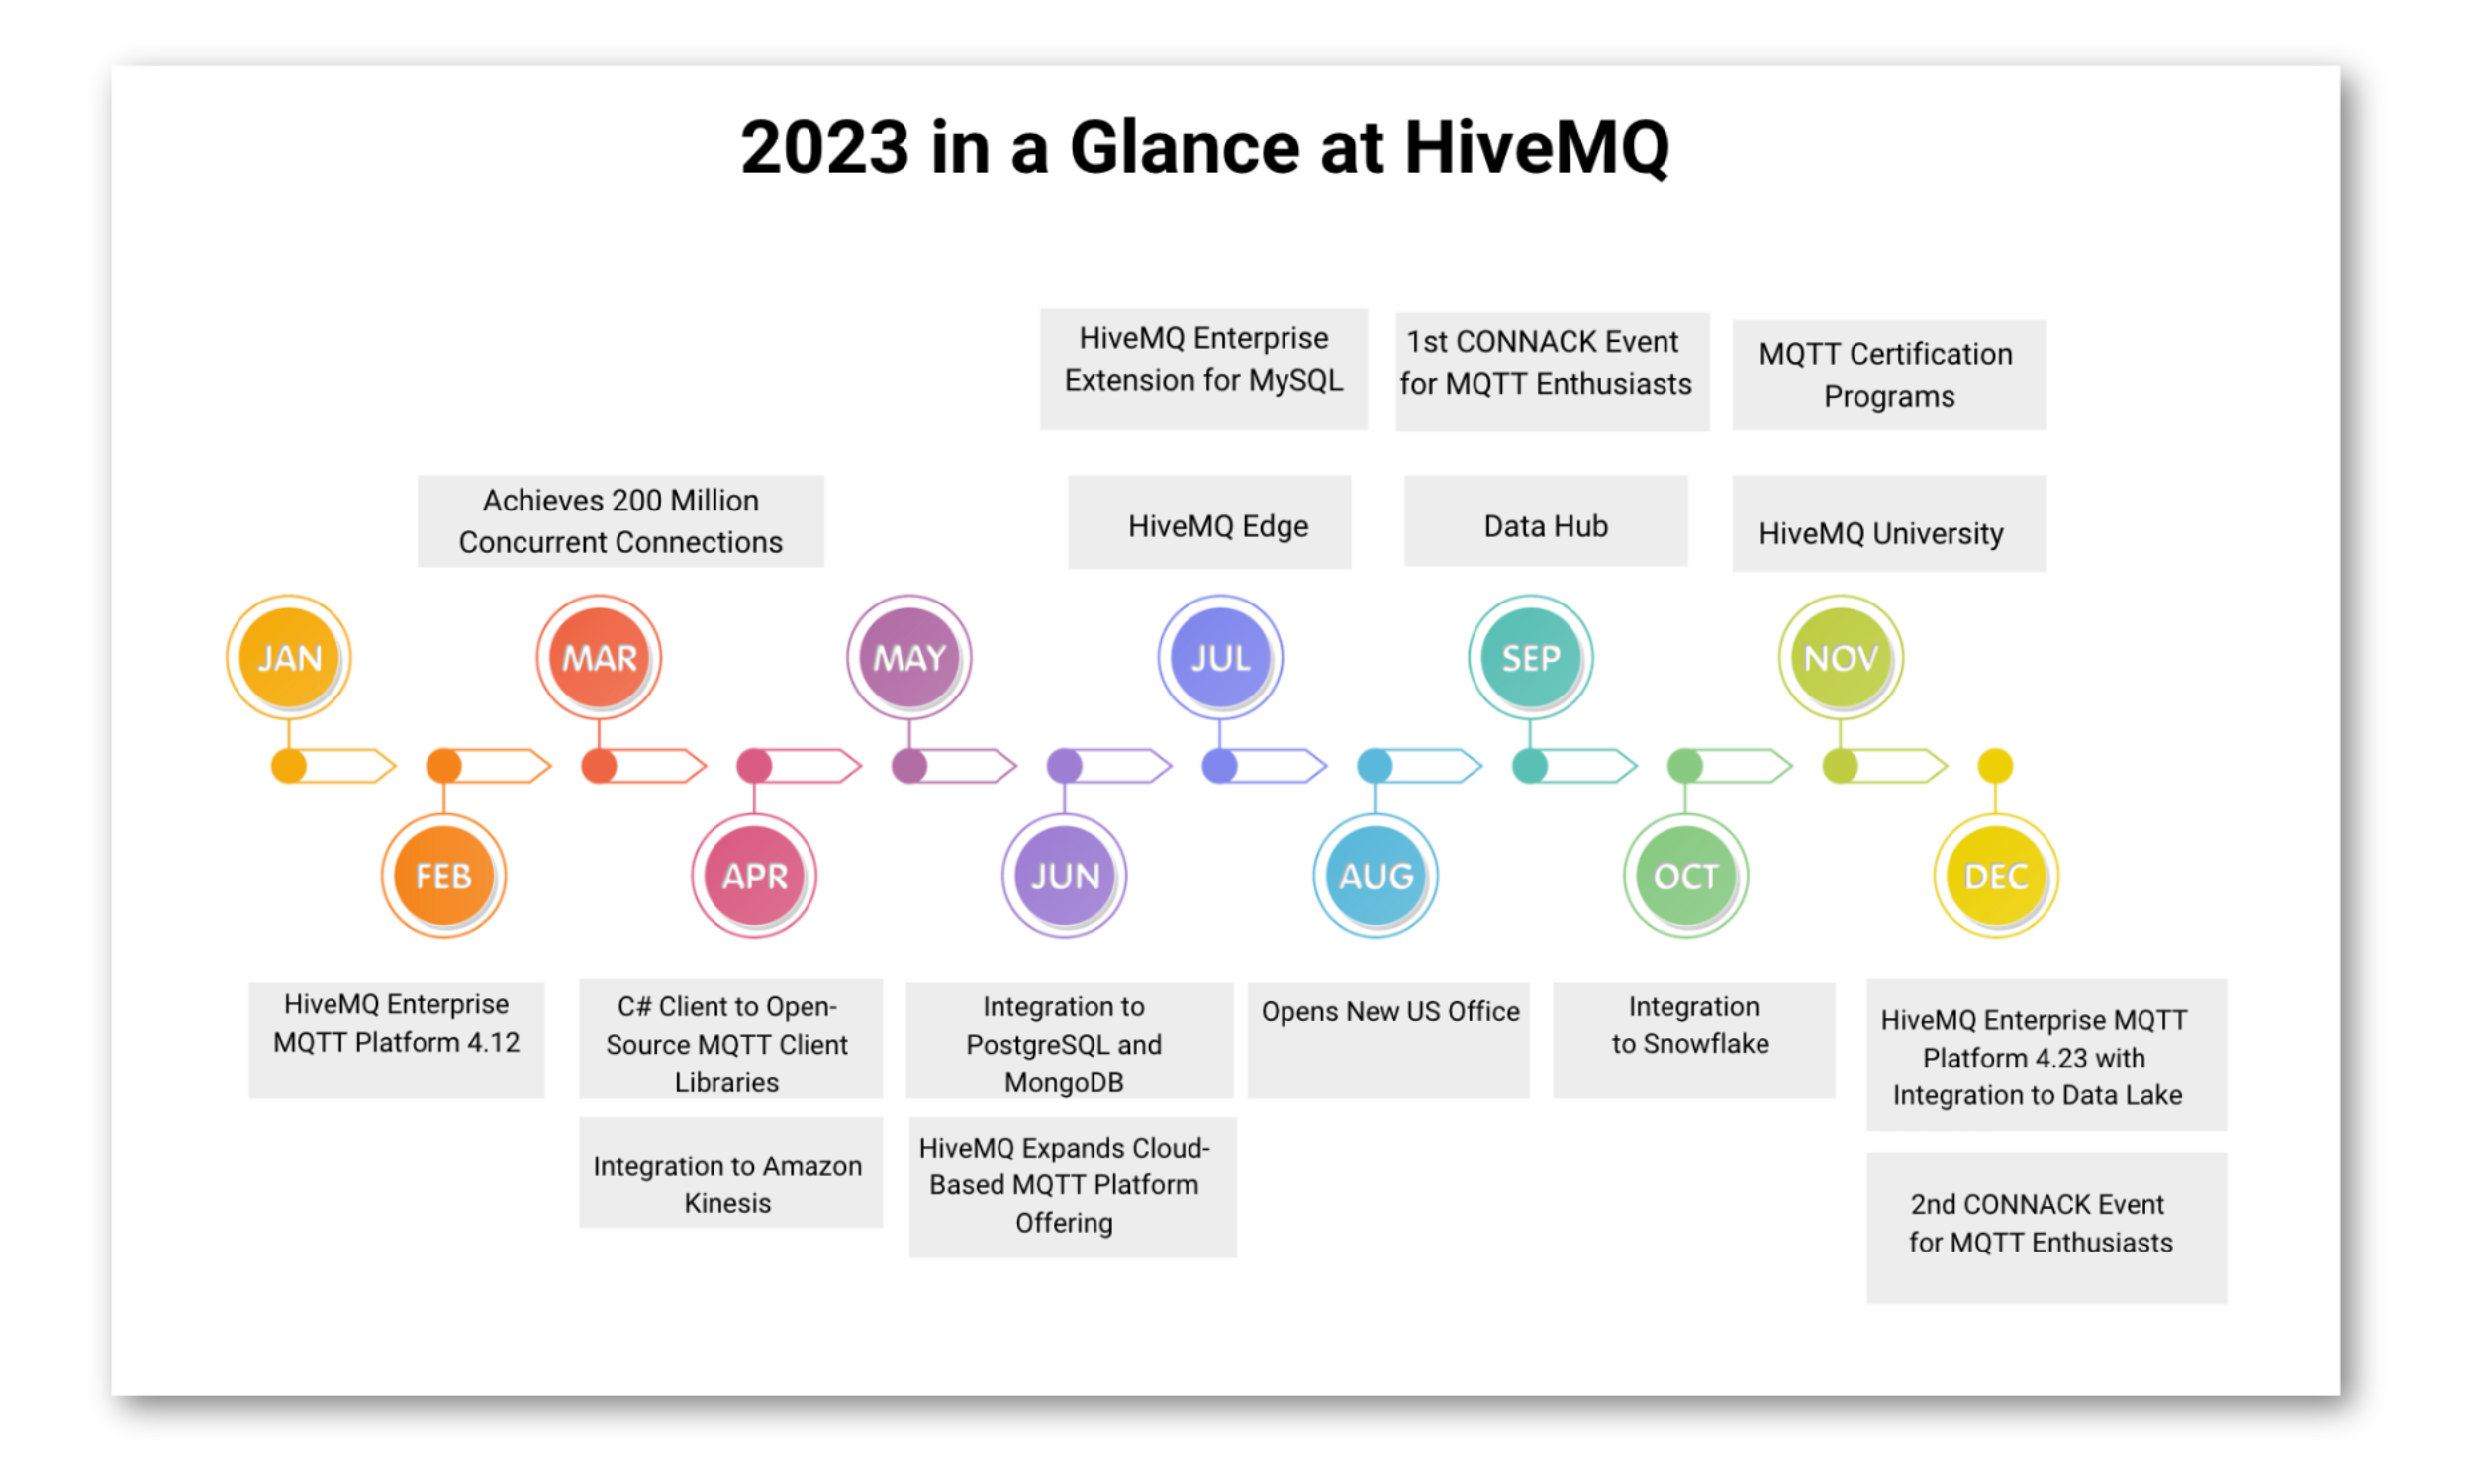 2023 in a Glance at HiveMQ